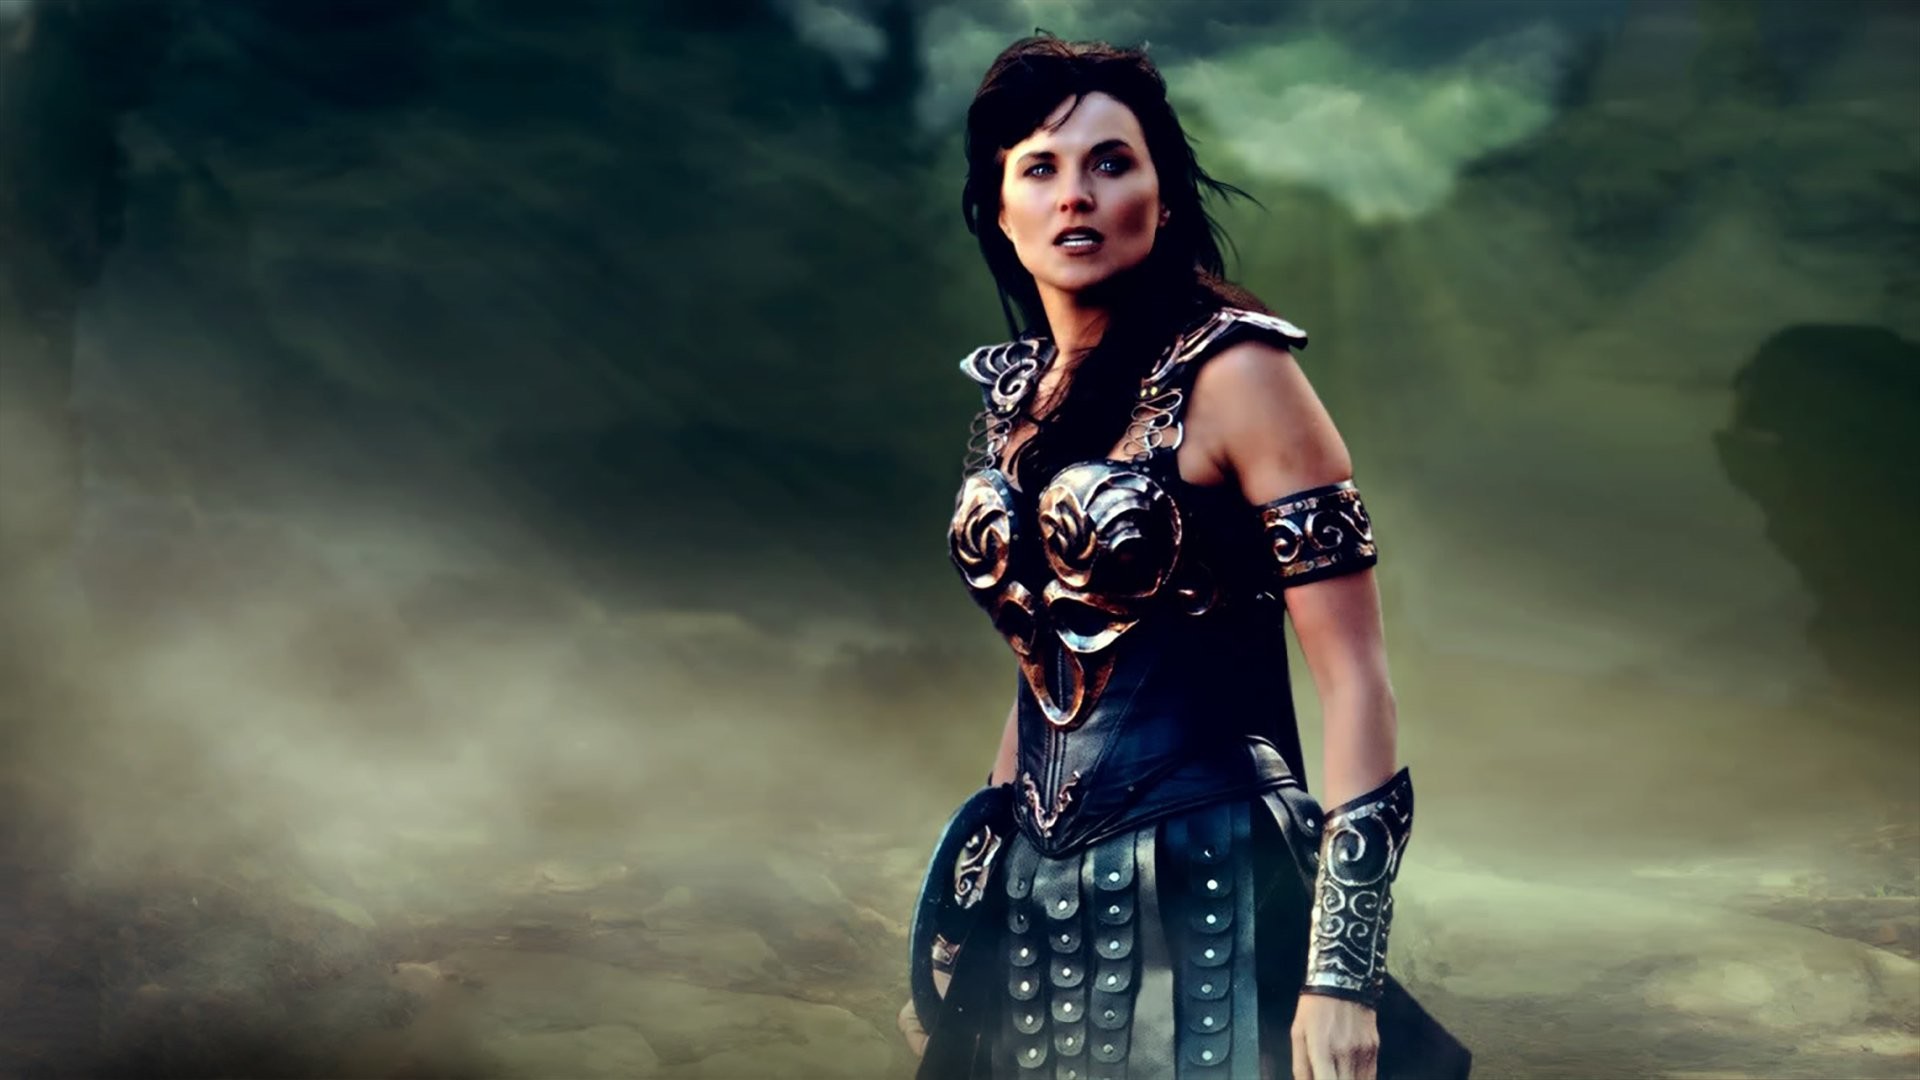 Xena Warrior Princess Wallpaper Pictures